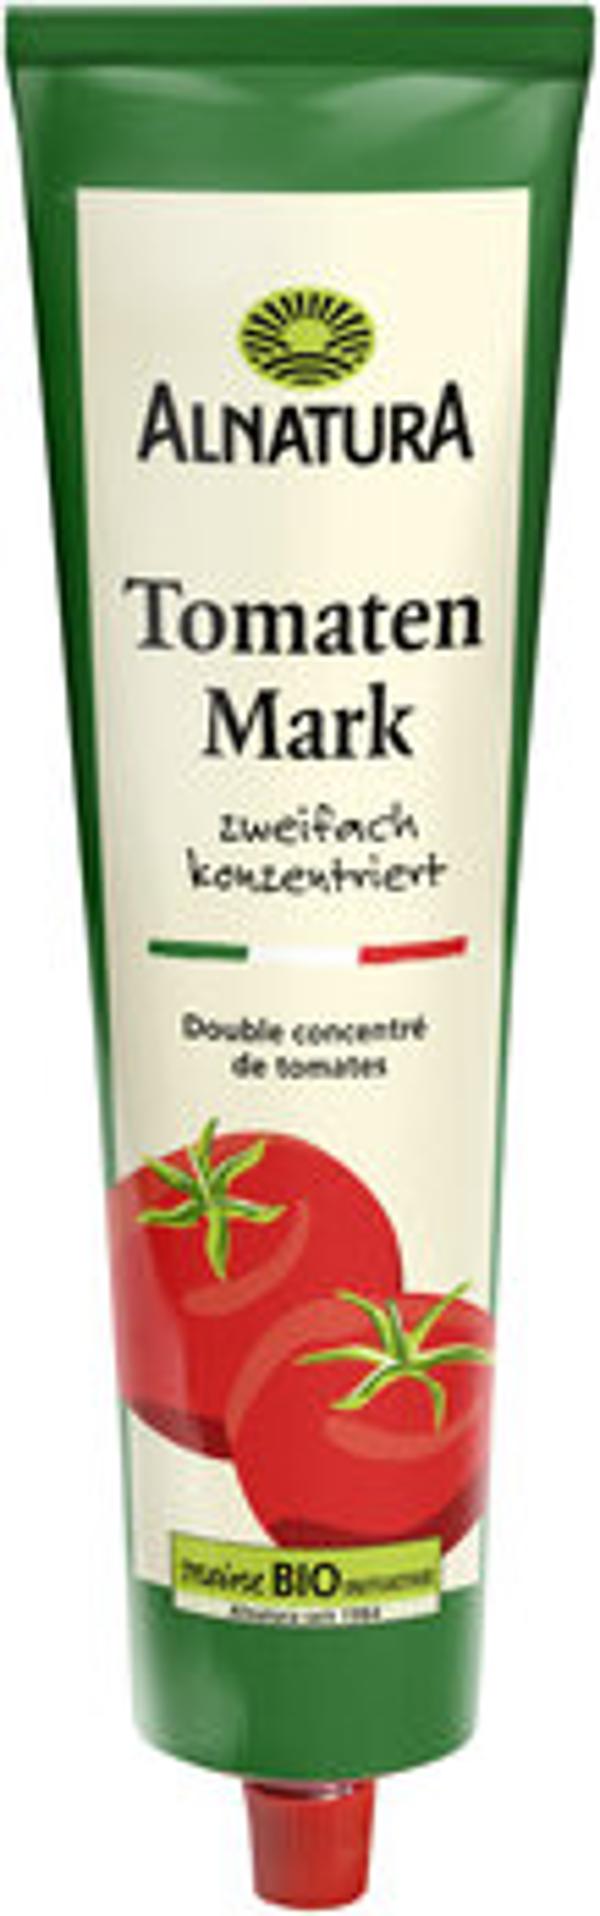 Produktfoto zu Alnatura Tomatenmark in der Tube 200g